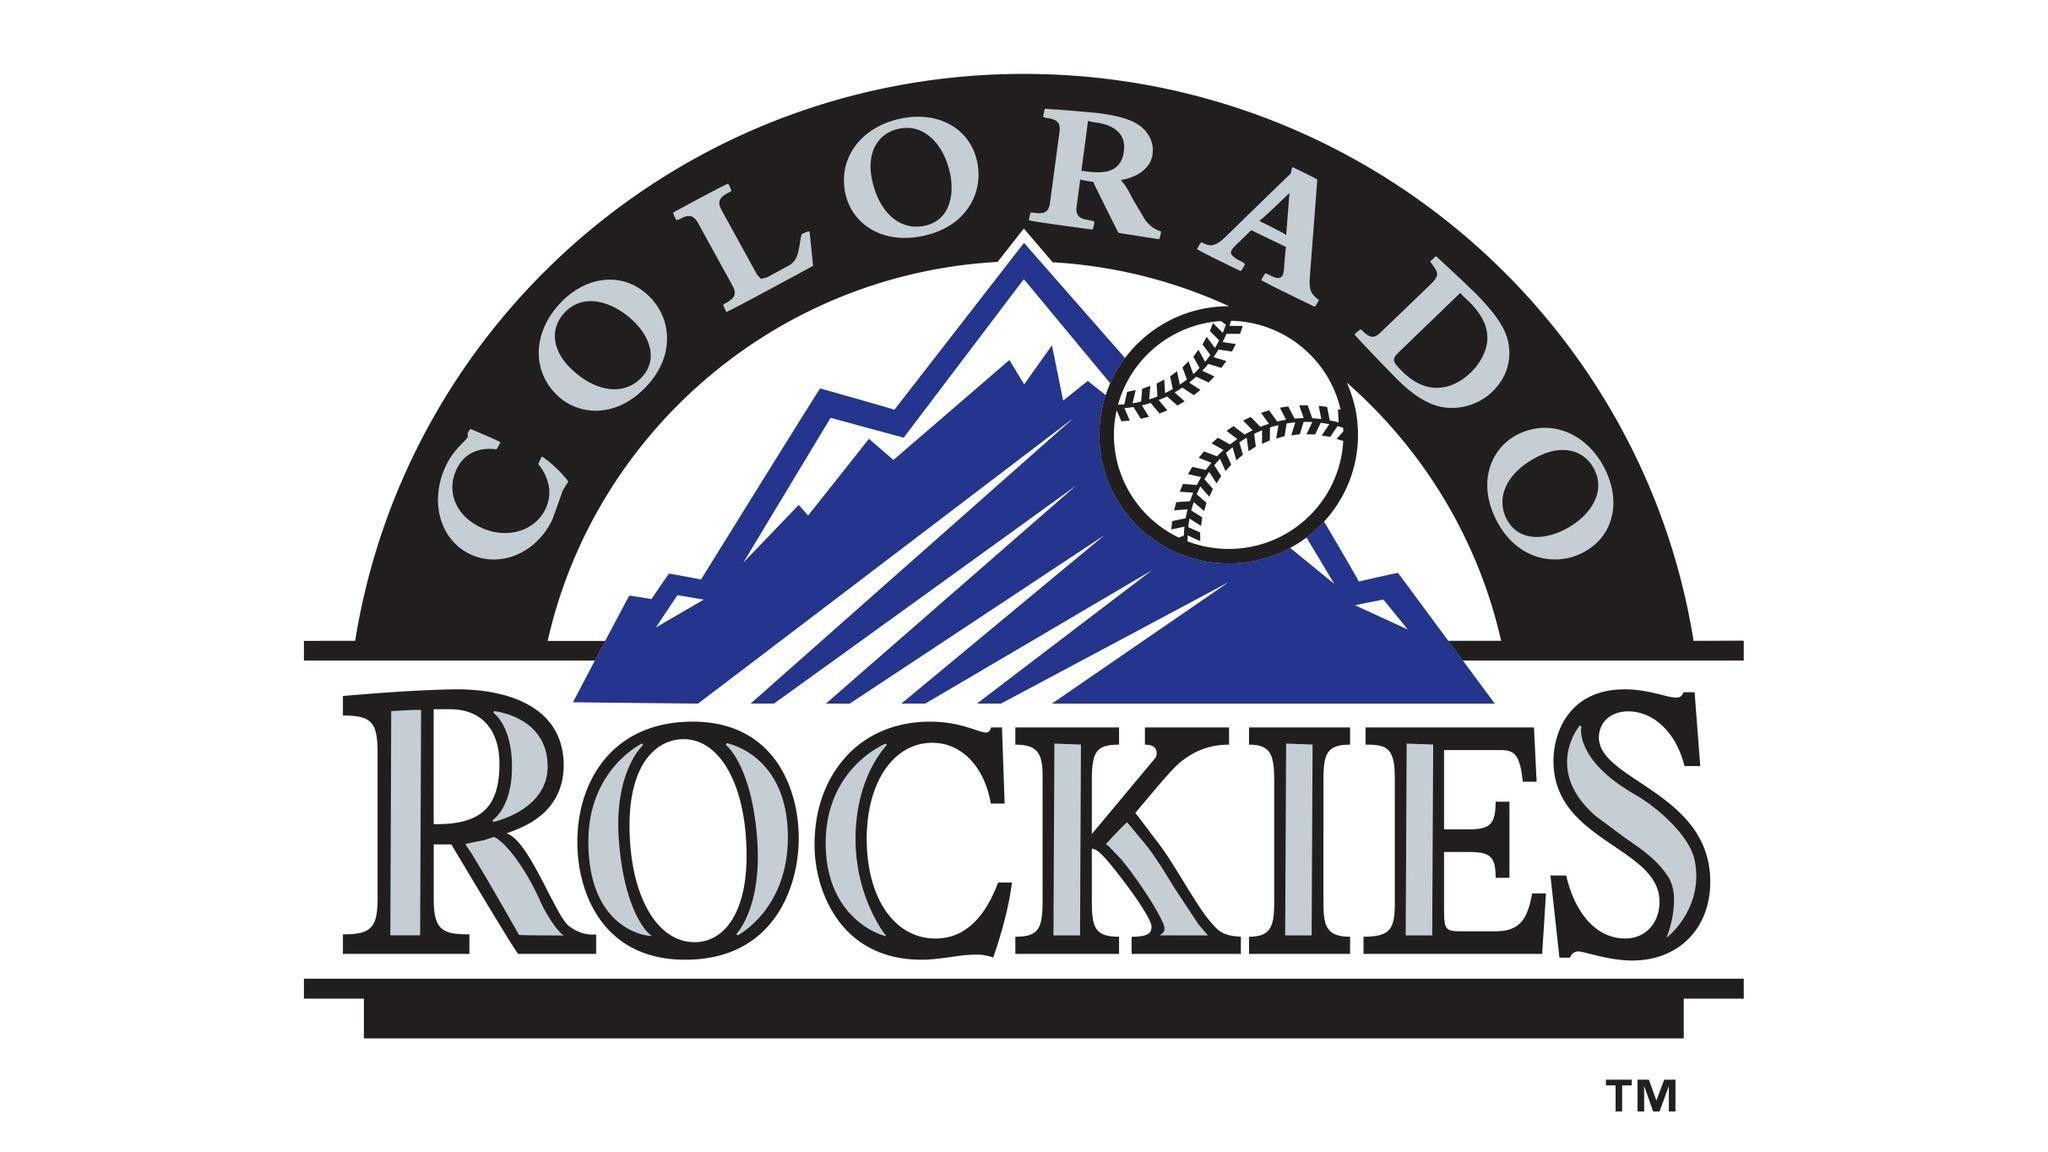 Colorado Rockies vs. St. Louis Cardinals. Coors Field. Baseball